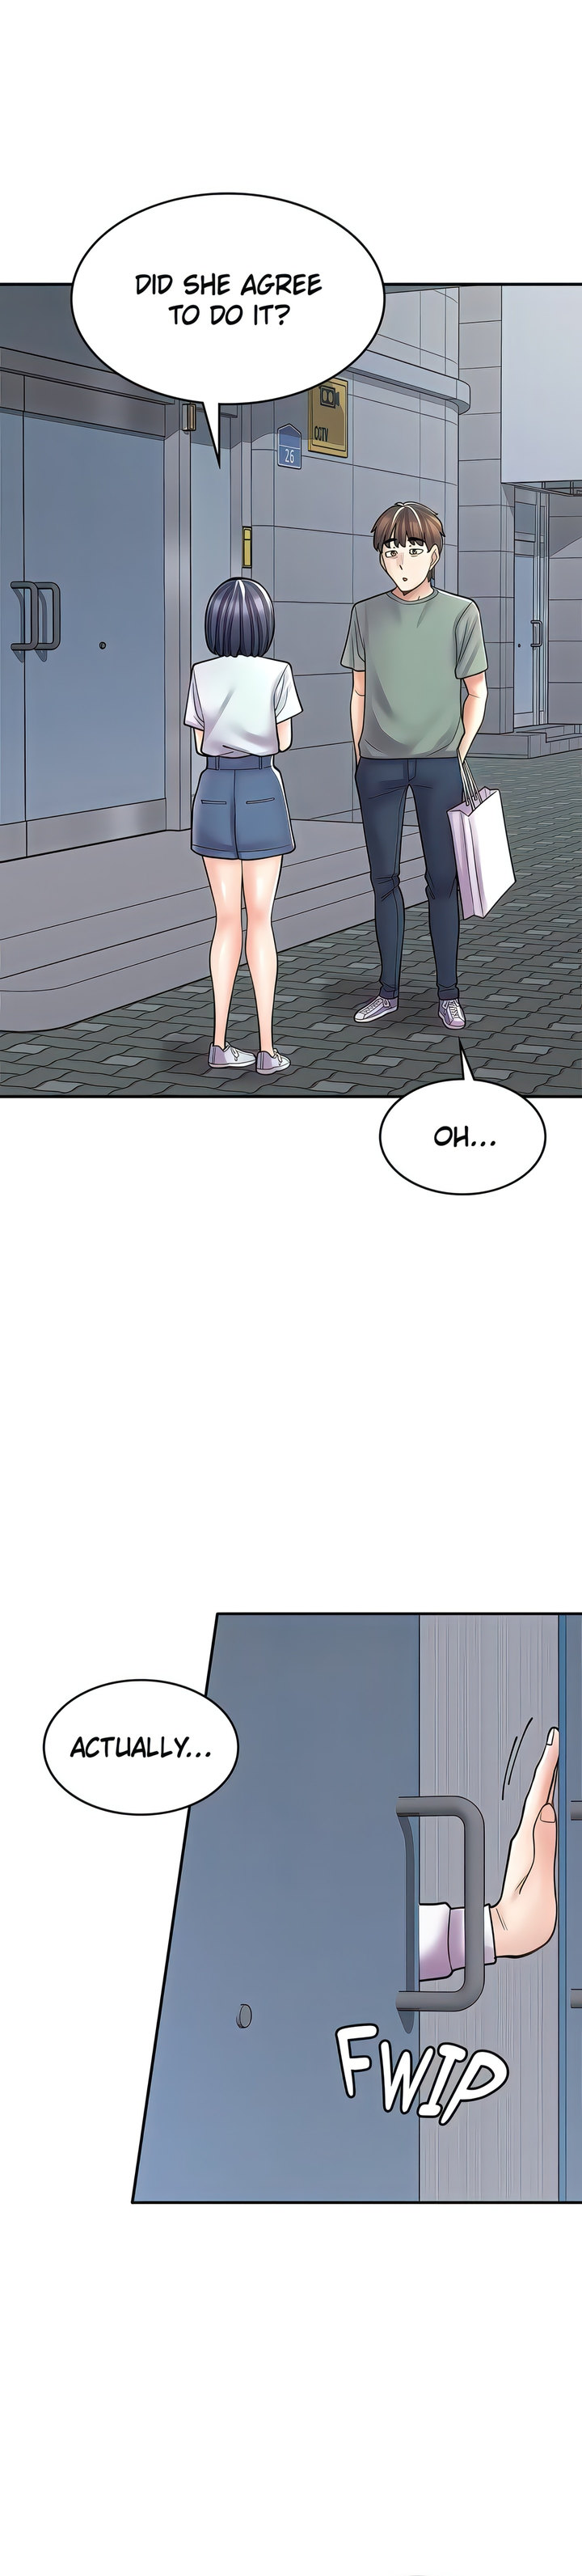 Erotic Manga Café Girls - Chapter 30 Page 1